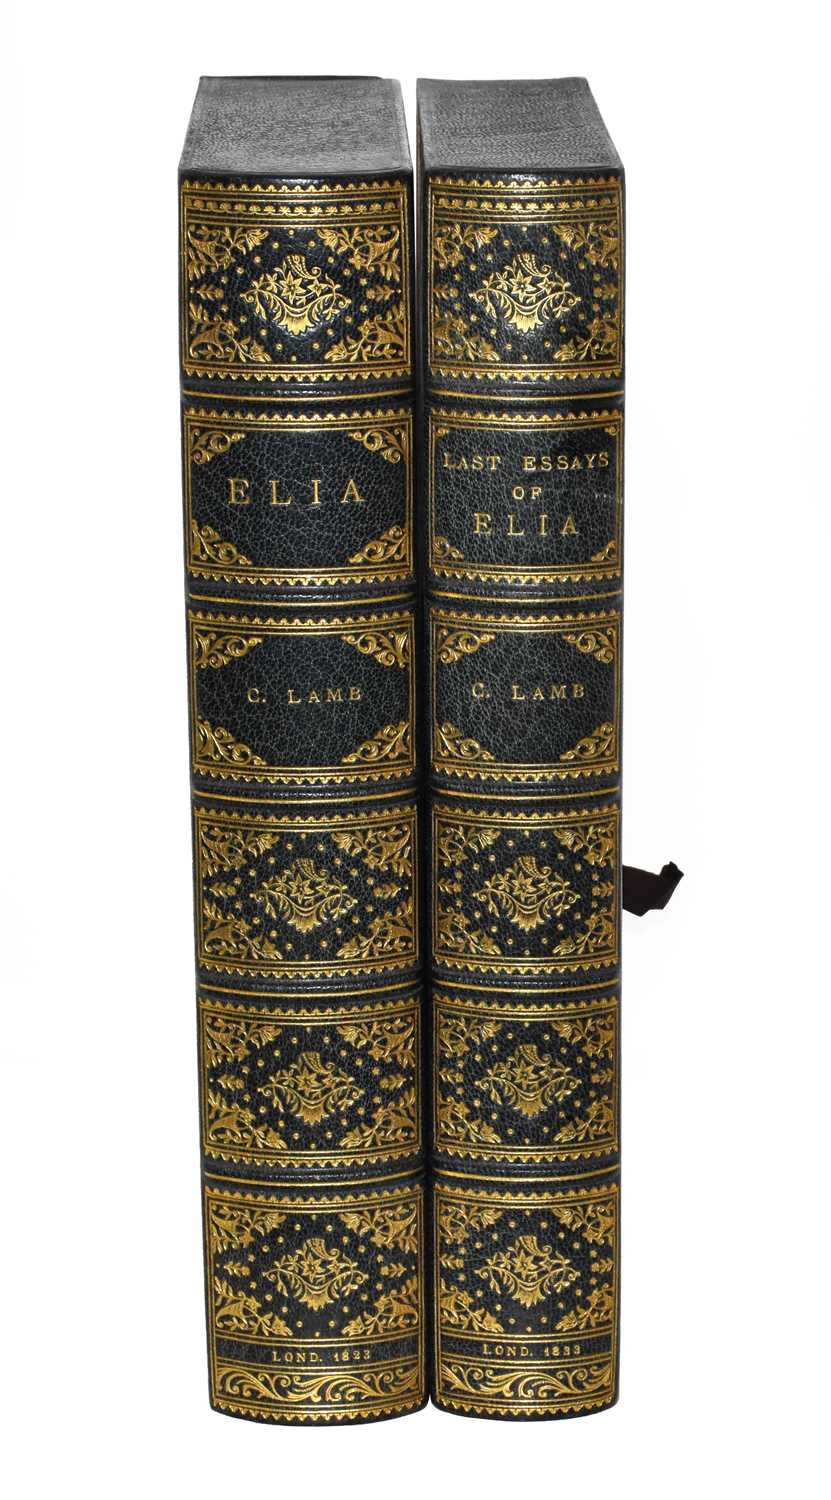 [Lamb, Charles]. Elia [and:] The Last Essays of Elia, London: Taylor and Hessey [-Edward Moxon],